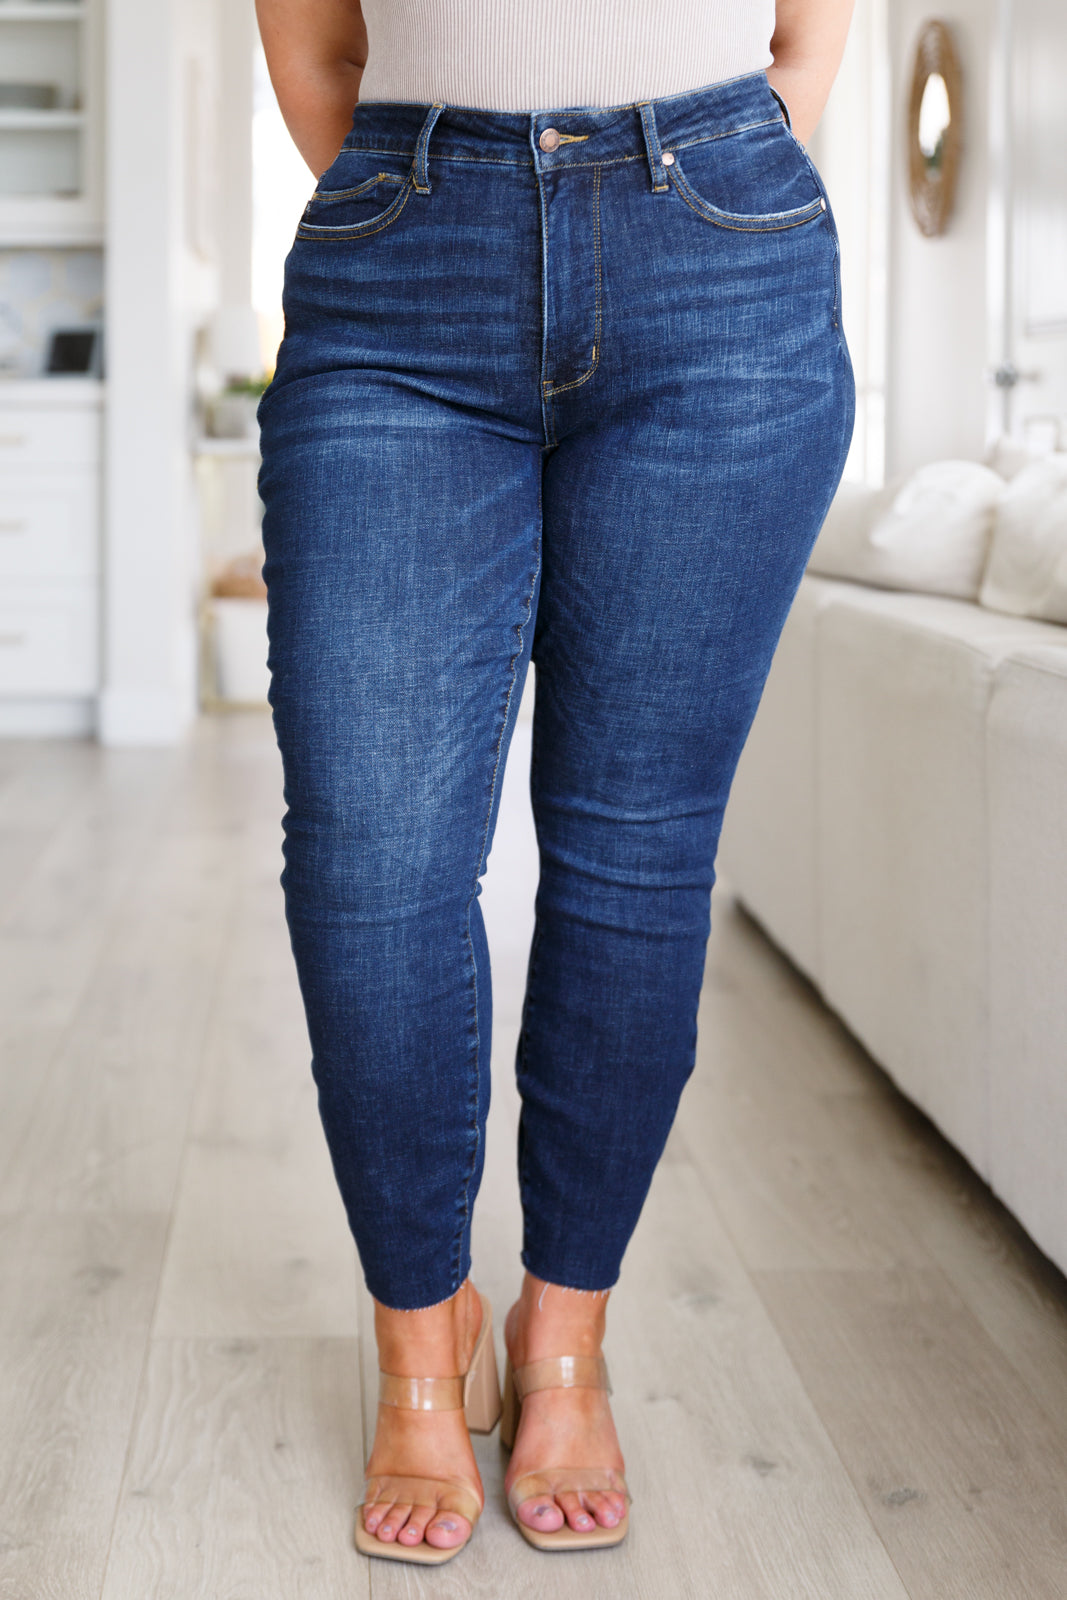 Nicole Tummy Control Skinny Jeans by Judy Blue